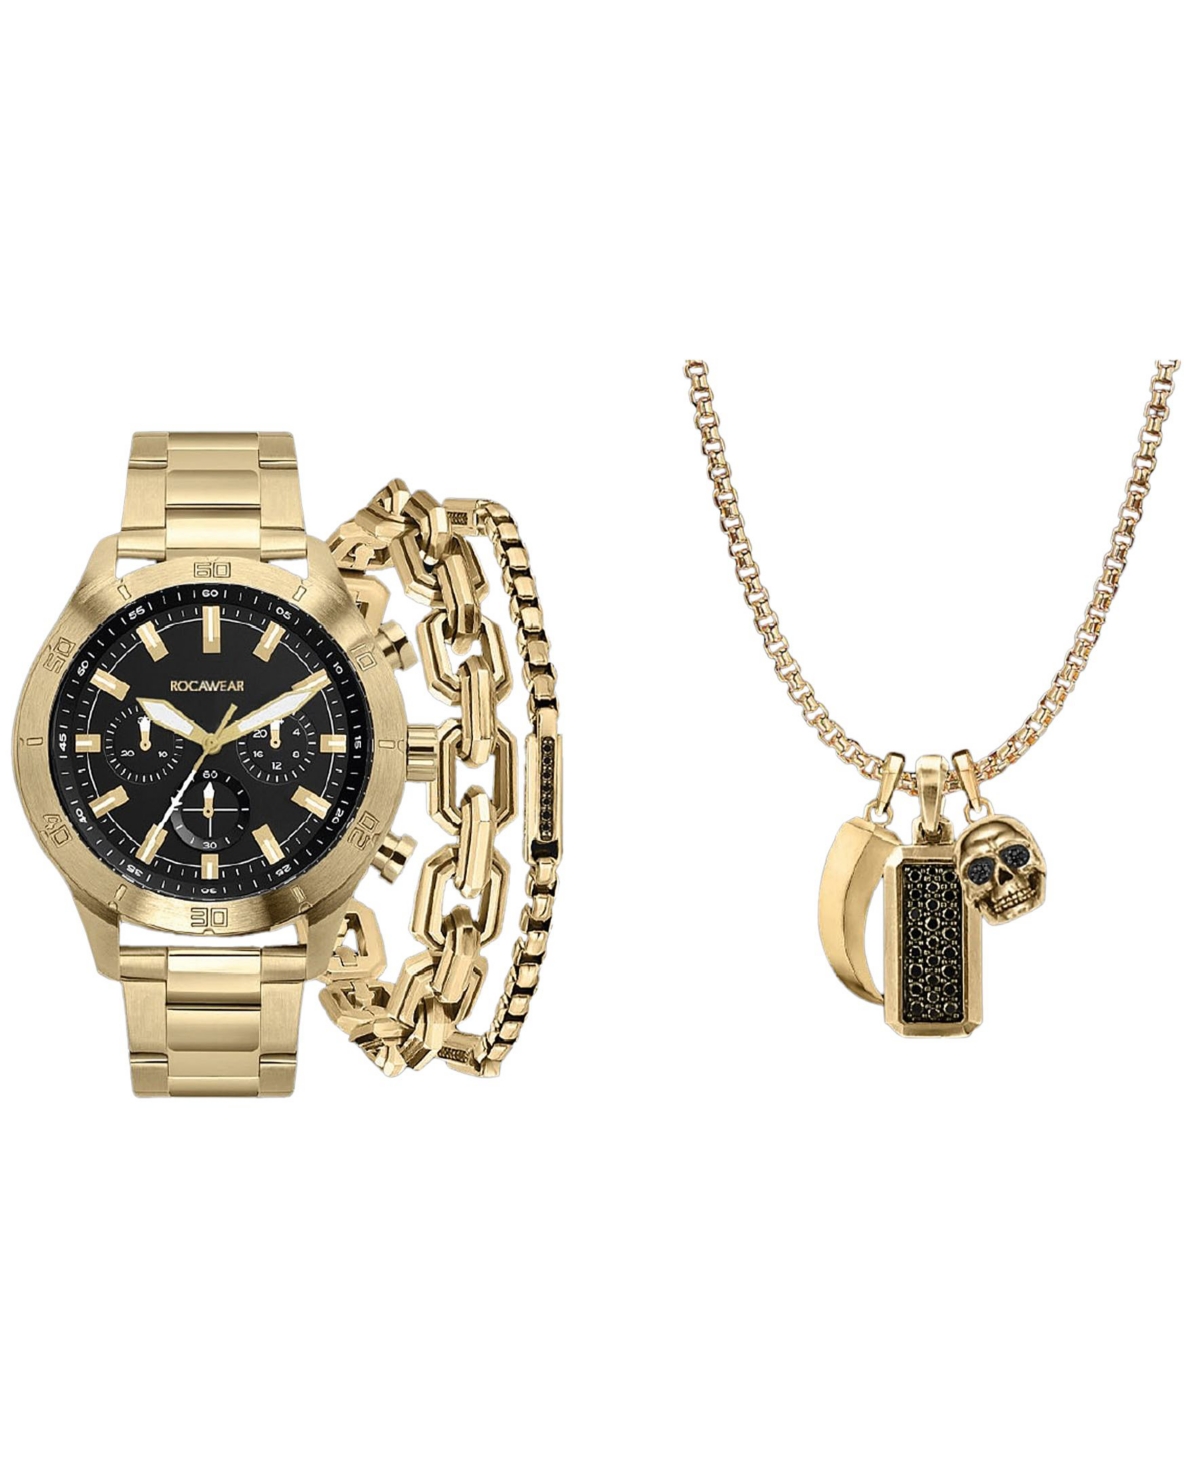 Men's Shiny Gold-Tone Metal Bracelet Watch 49mm Set - Gold-Tone